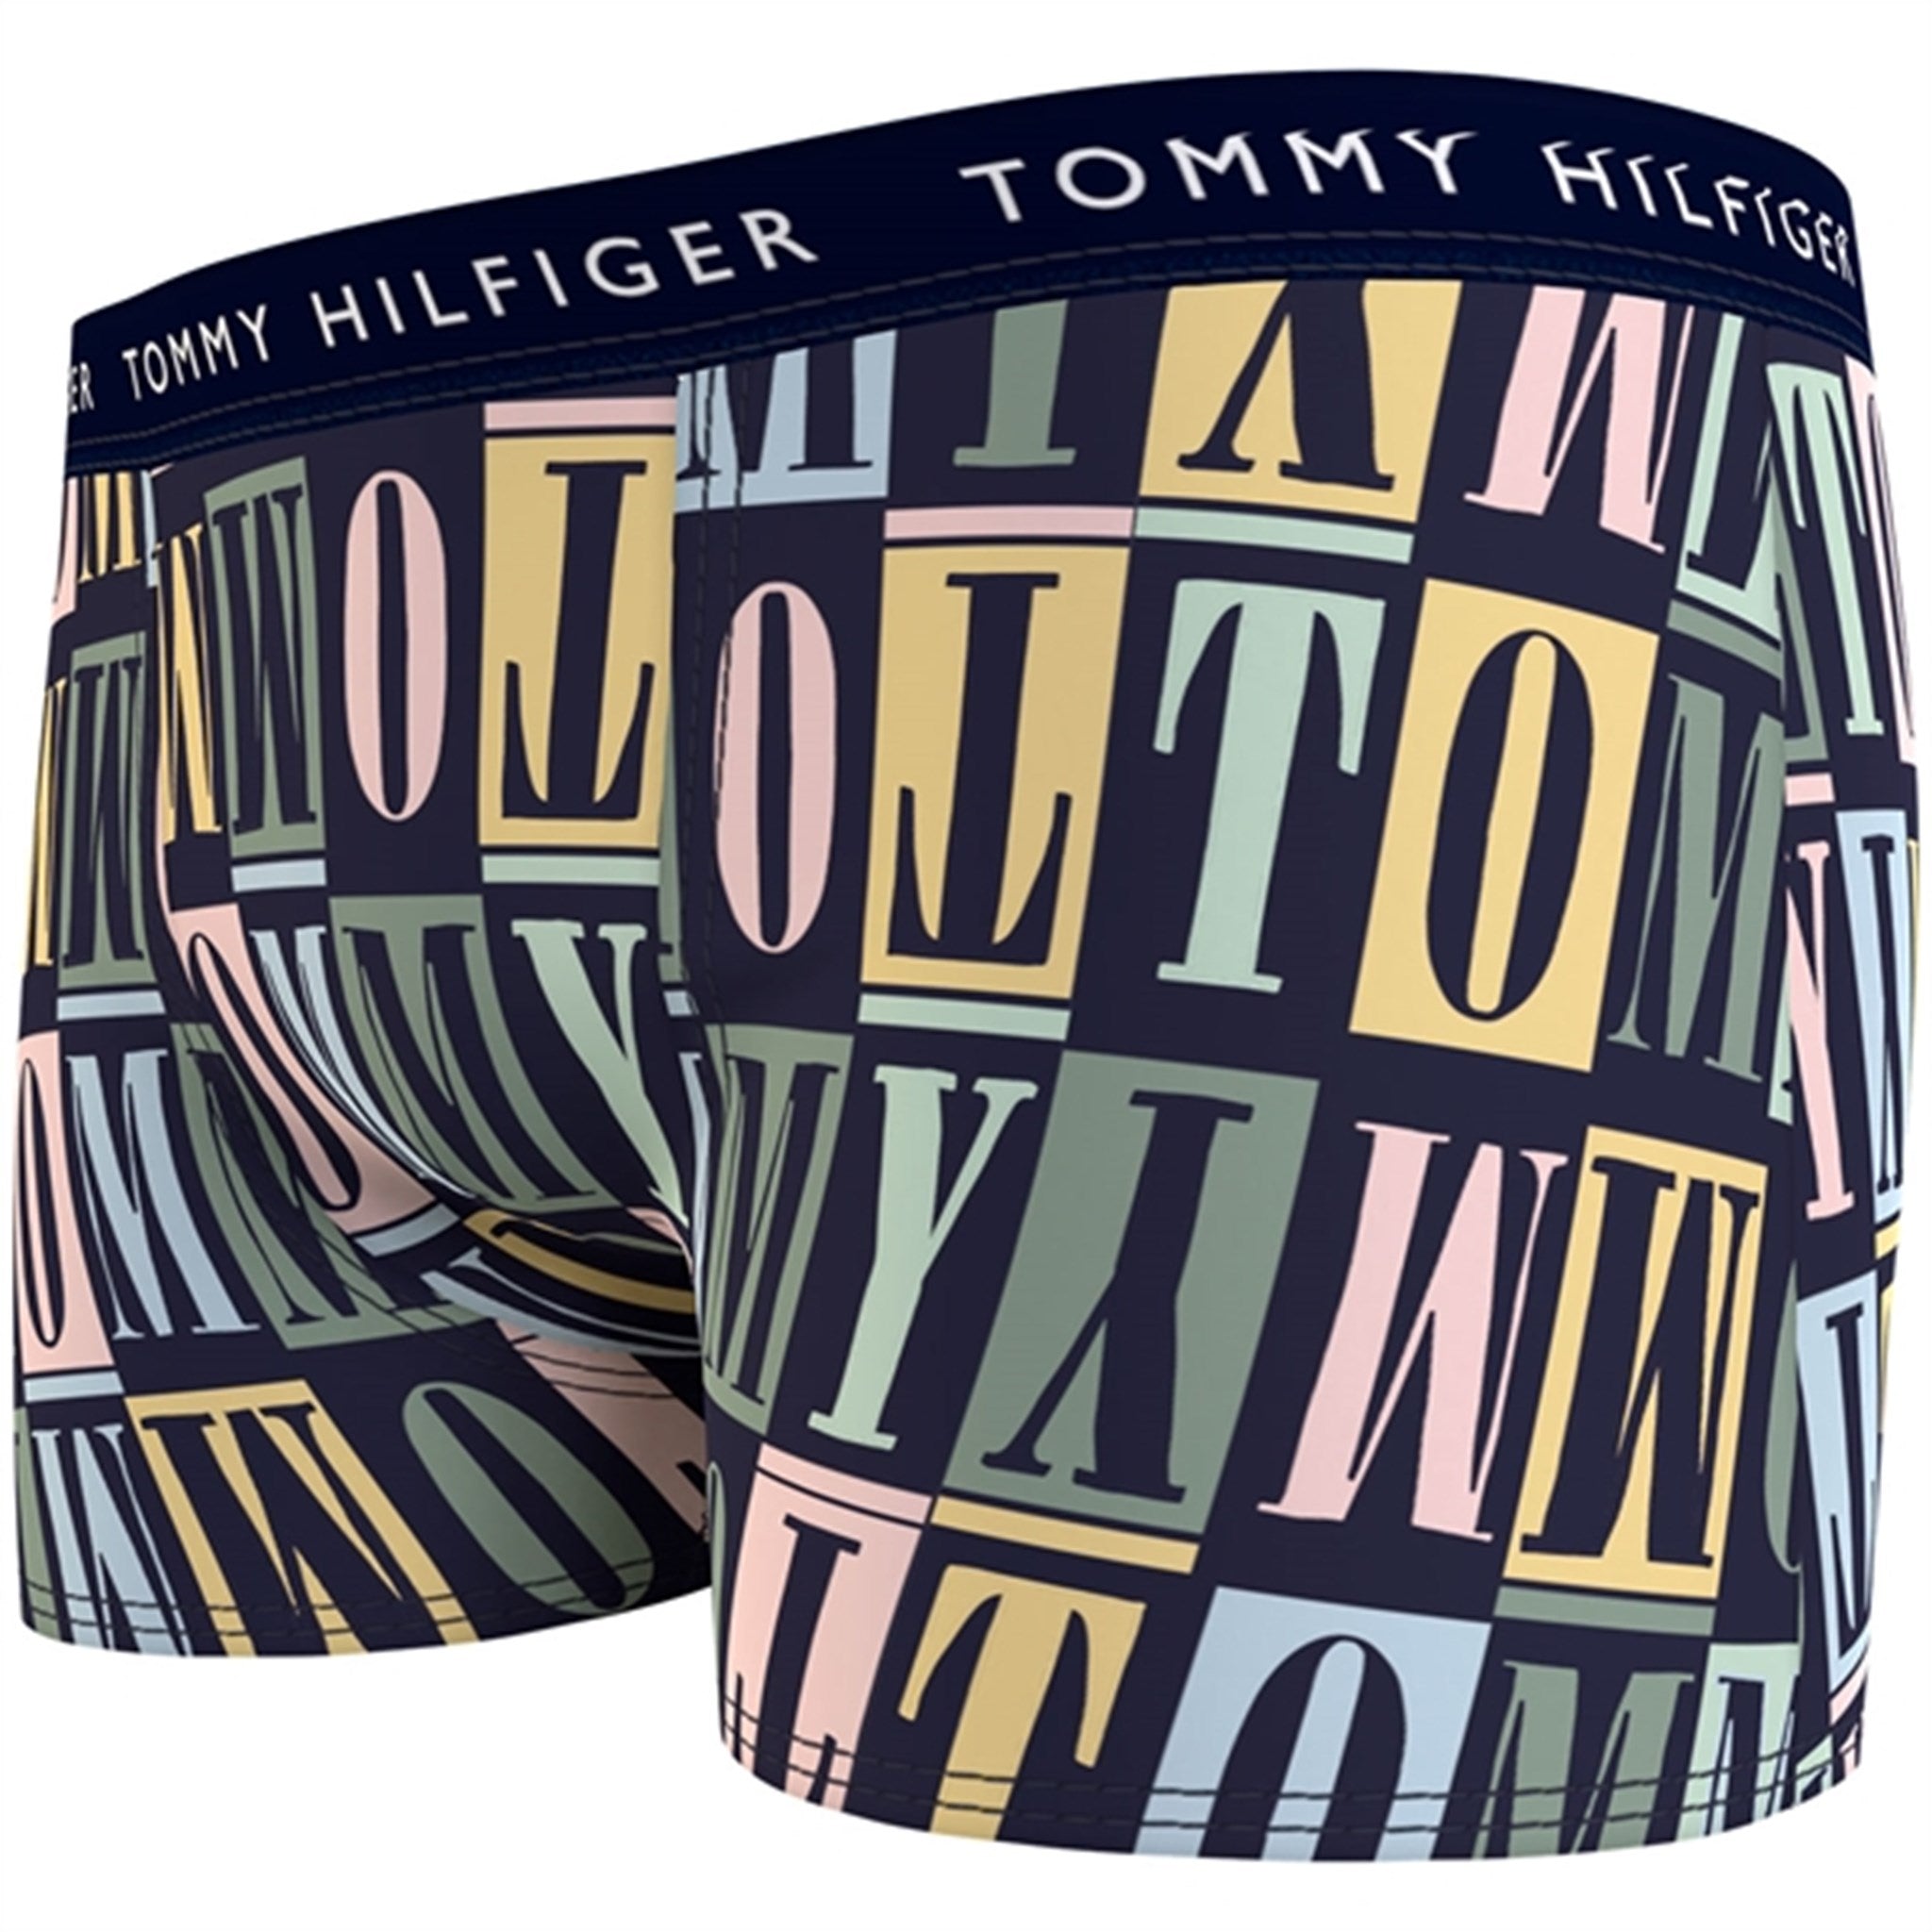 Tommy Hilfiger Boxershorts 3-pak Type Prnt/Twi Navy/Minty 2